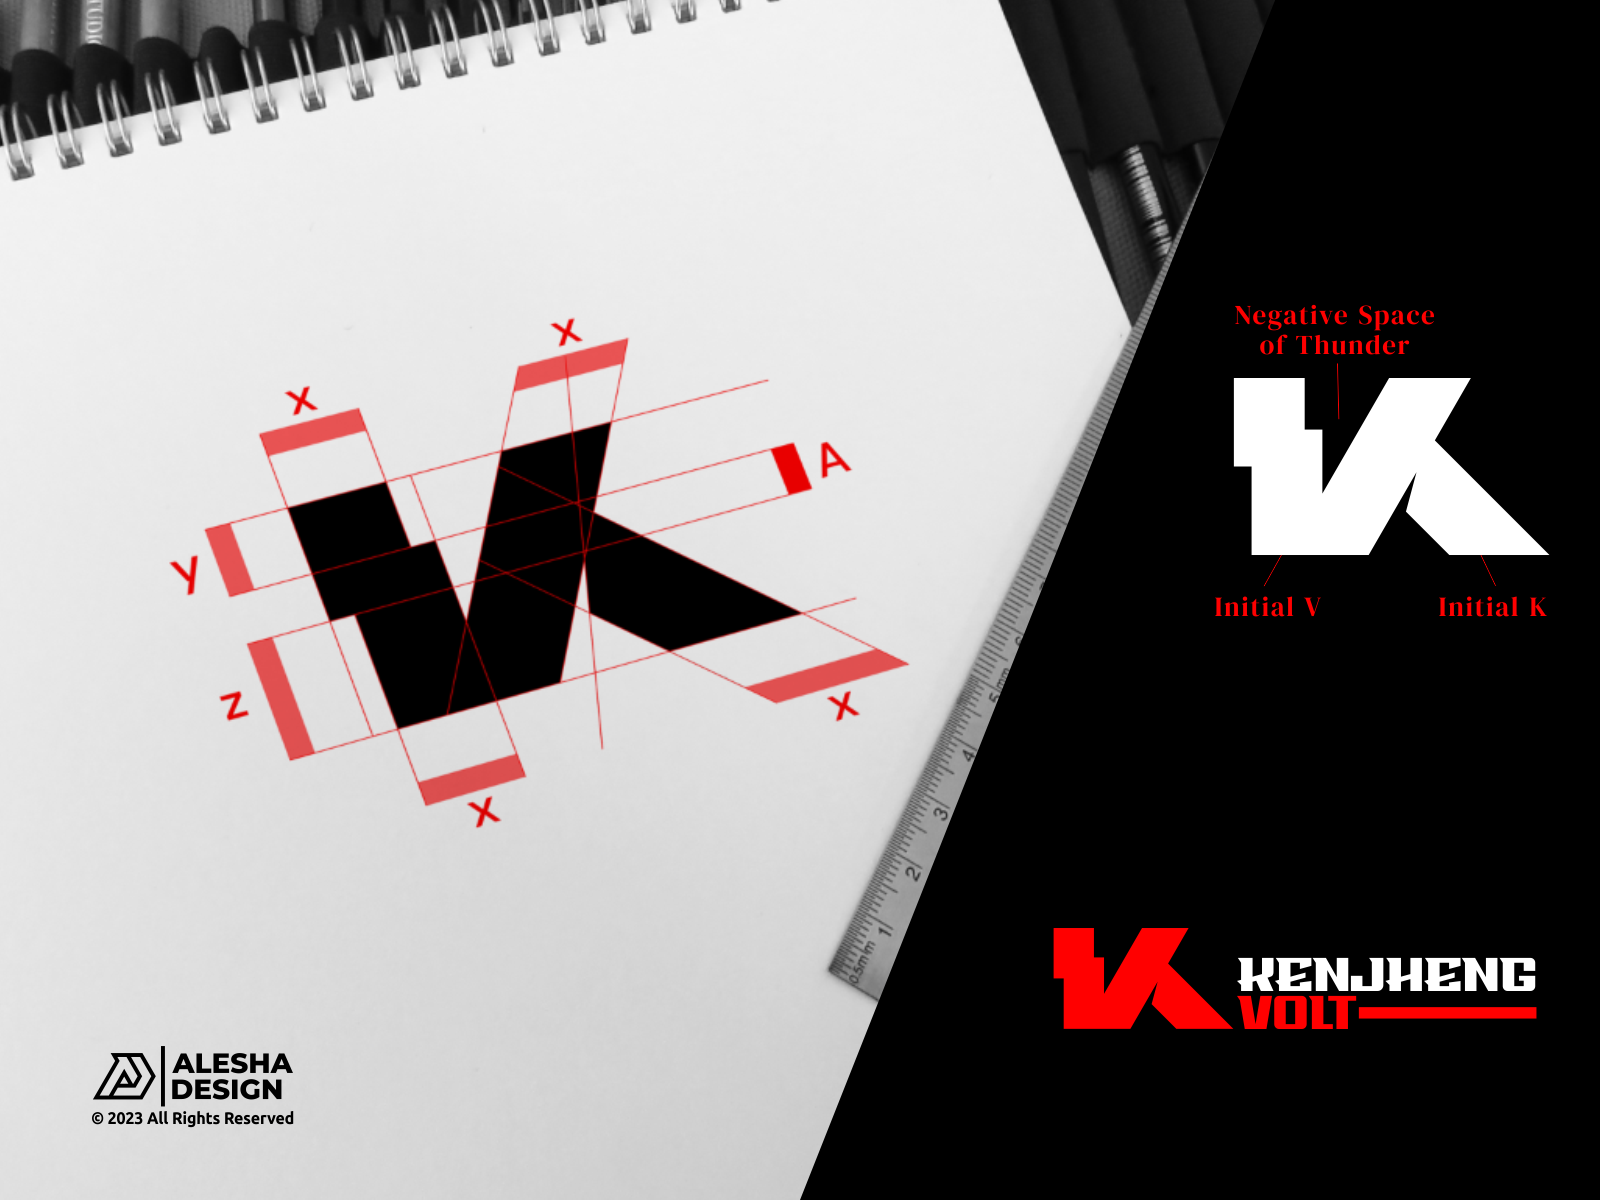 MM Monogram Logo V5 By Vectorseller